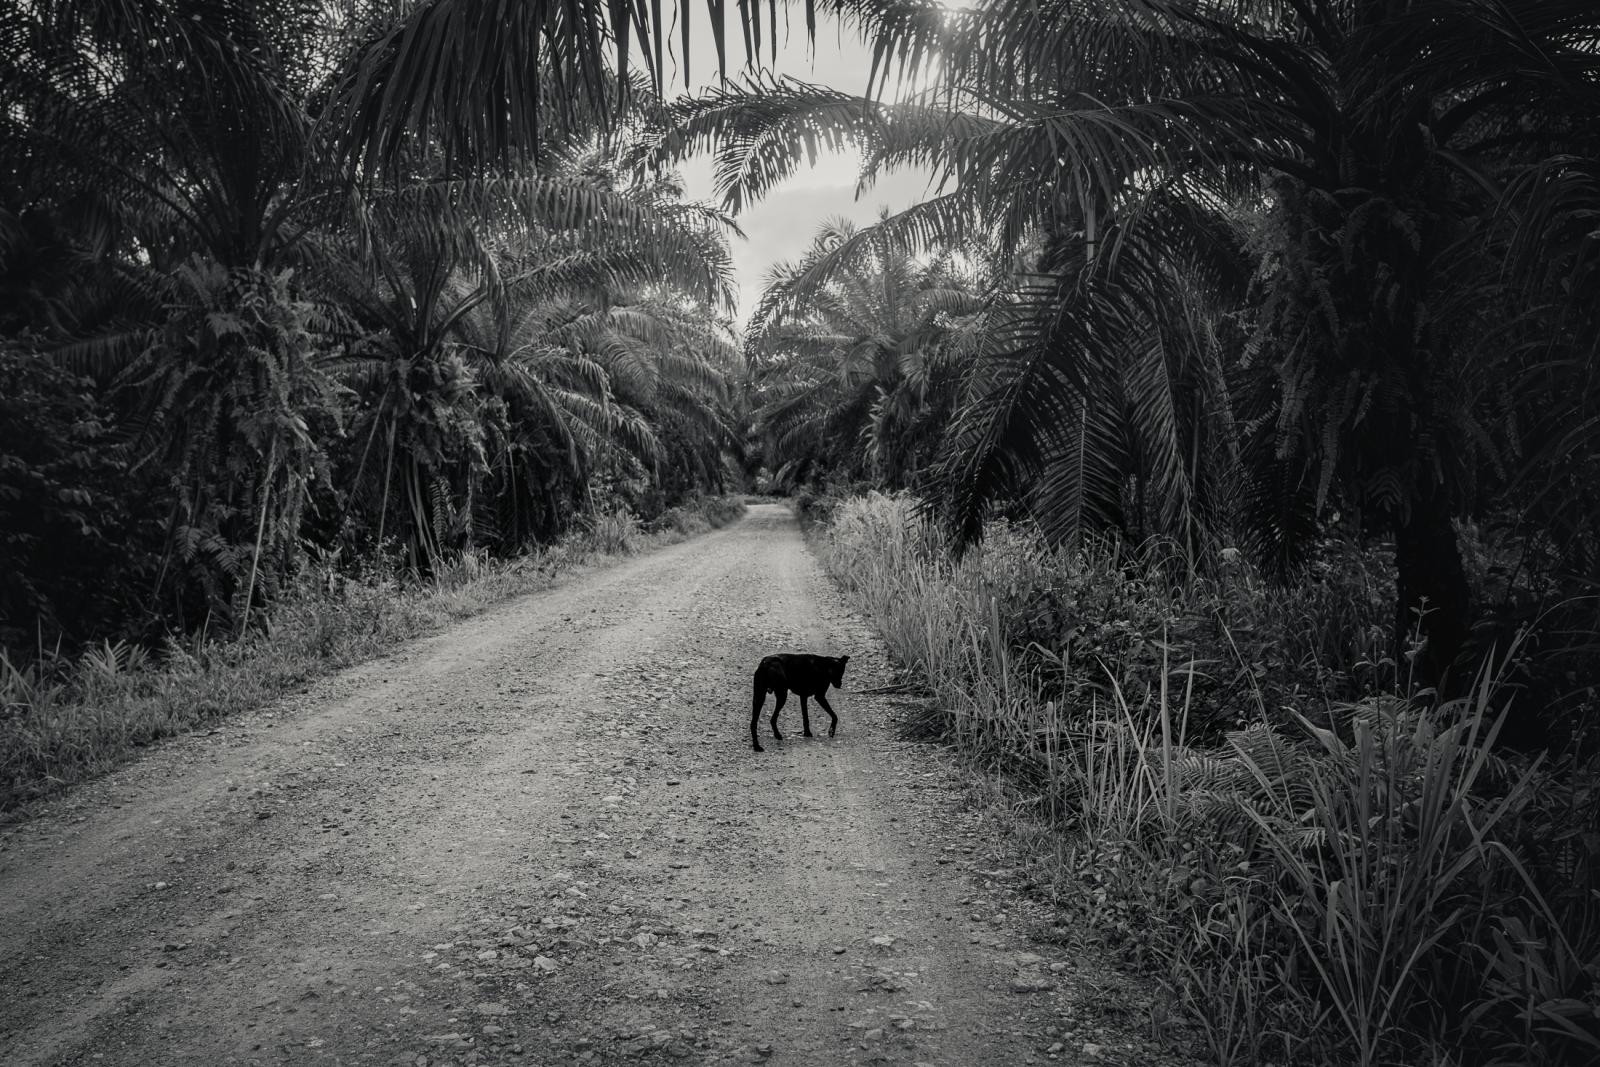  An Oil Palm Plantation in Borneo, Malaysia. 